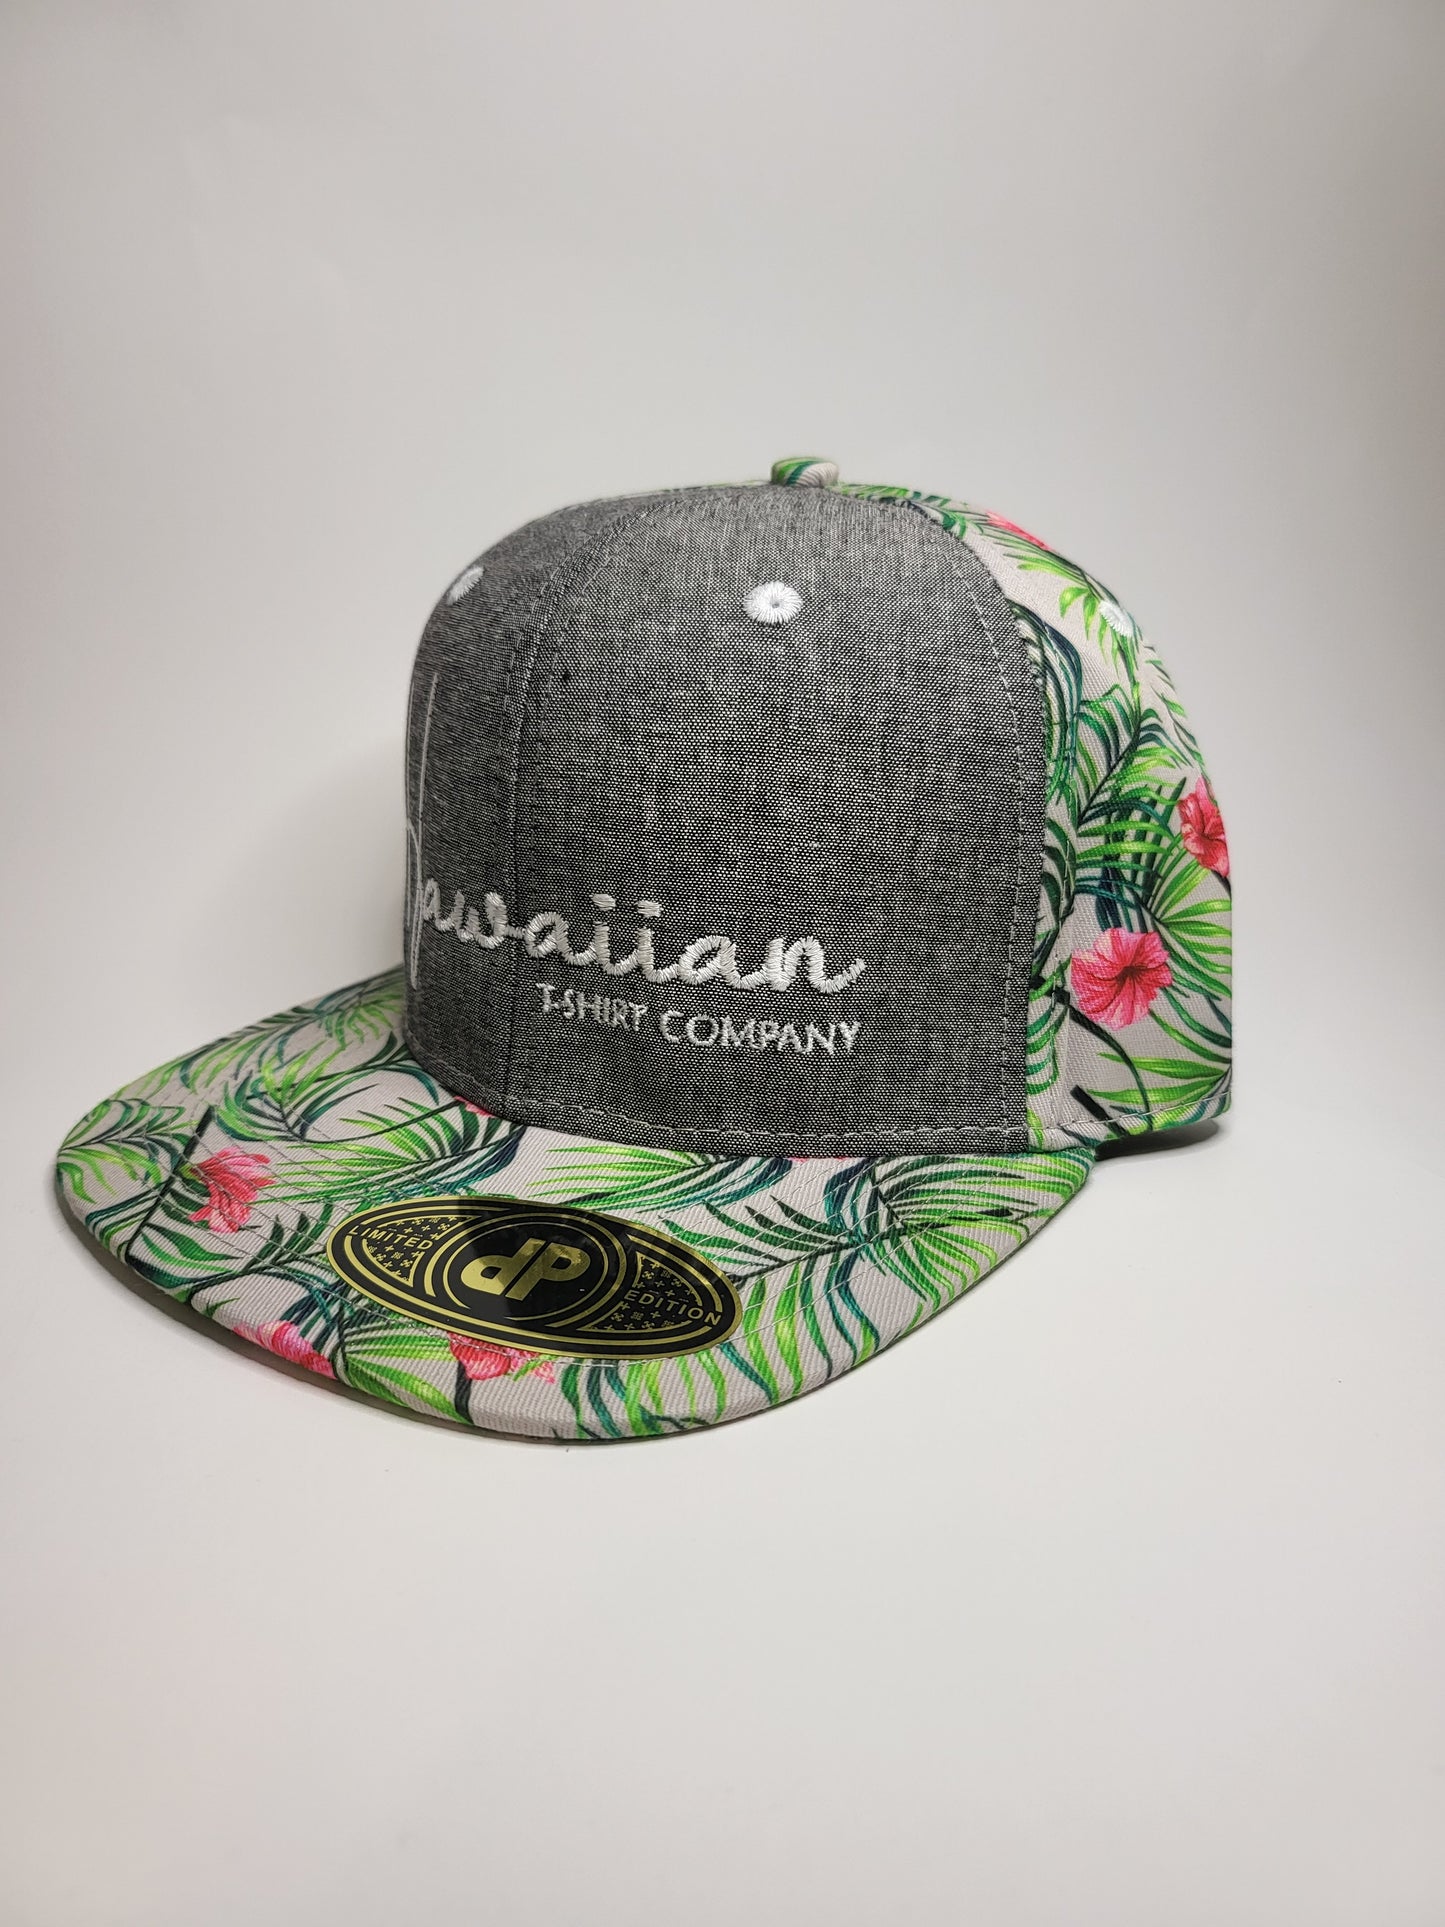 Hats "Denim & Floral" Flatbill Snapback